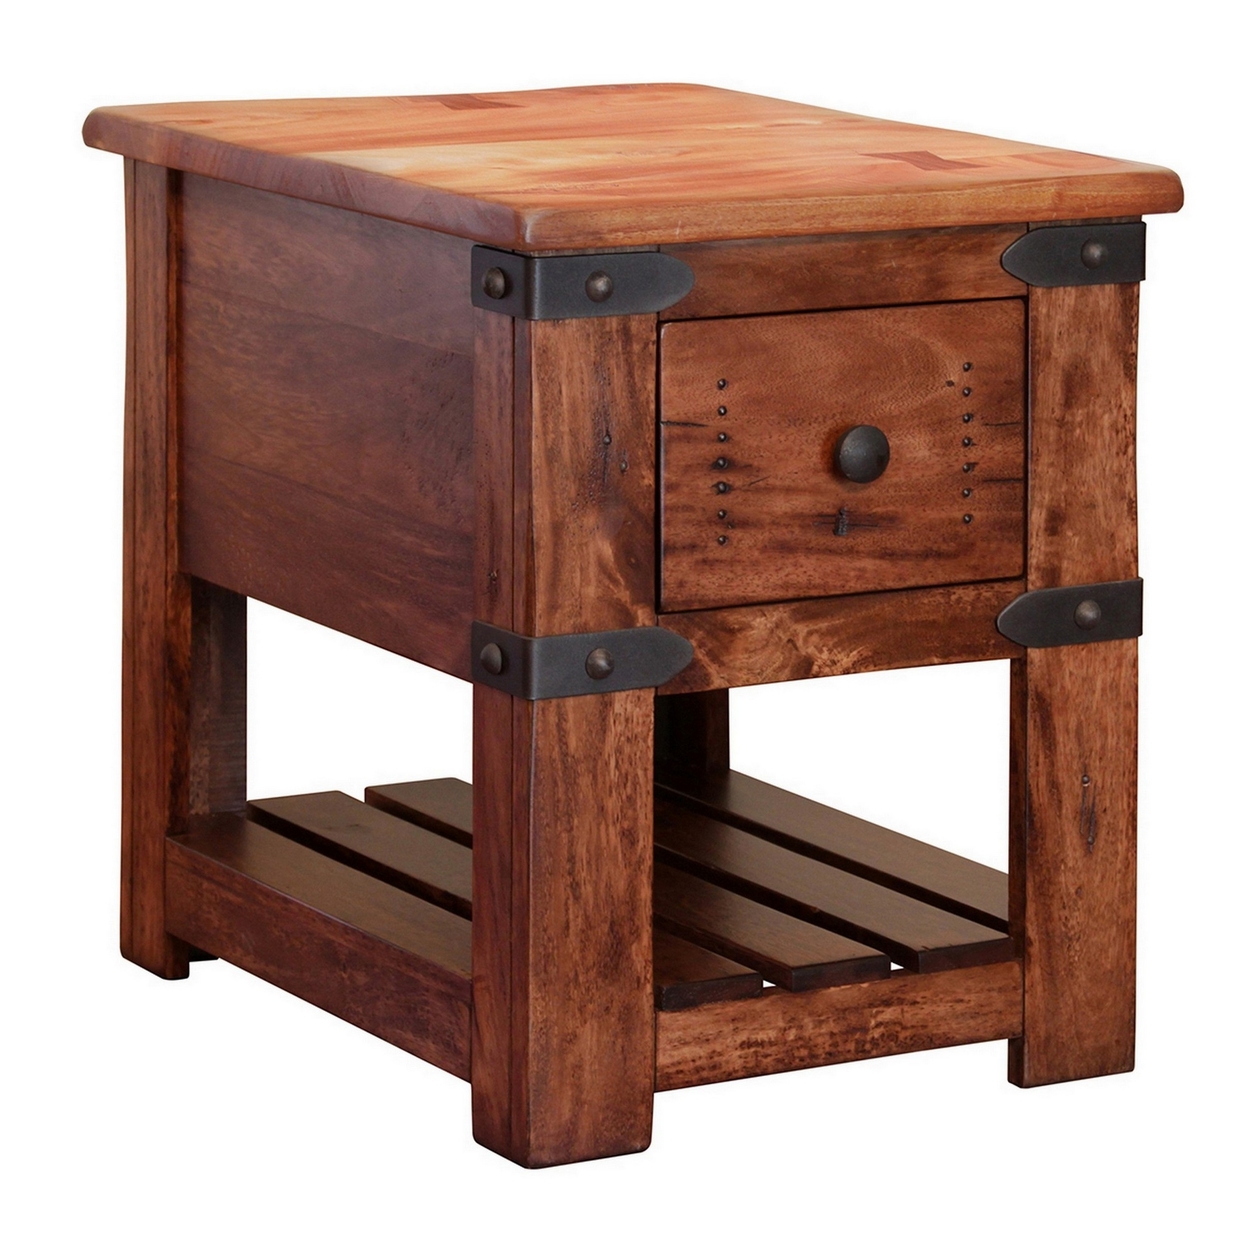 Umey 24 Inch 1 Drawer Chairside End Table, Slatted Shelf, Brown Solid Wood- Saltoro Sherpi